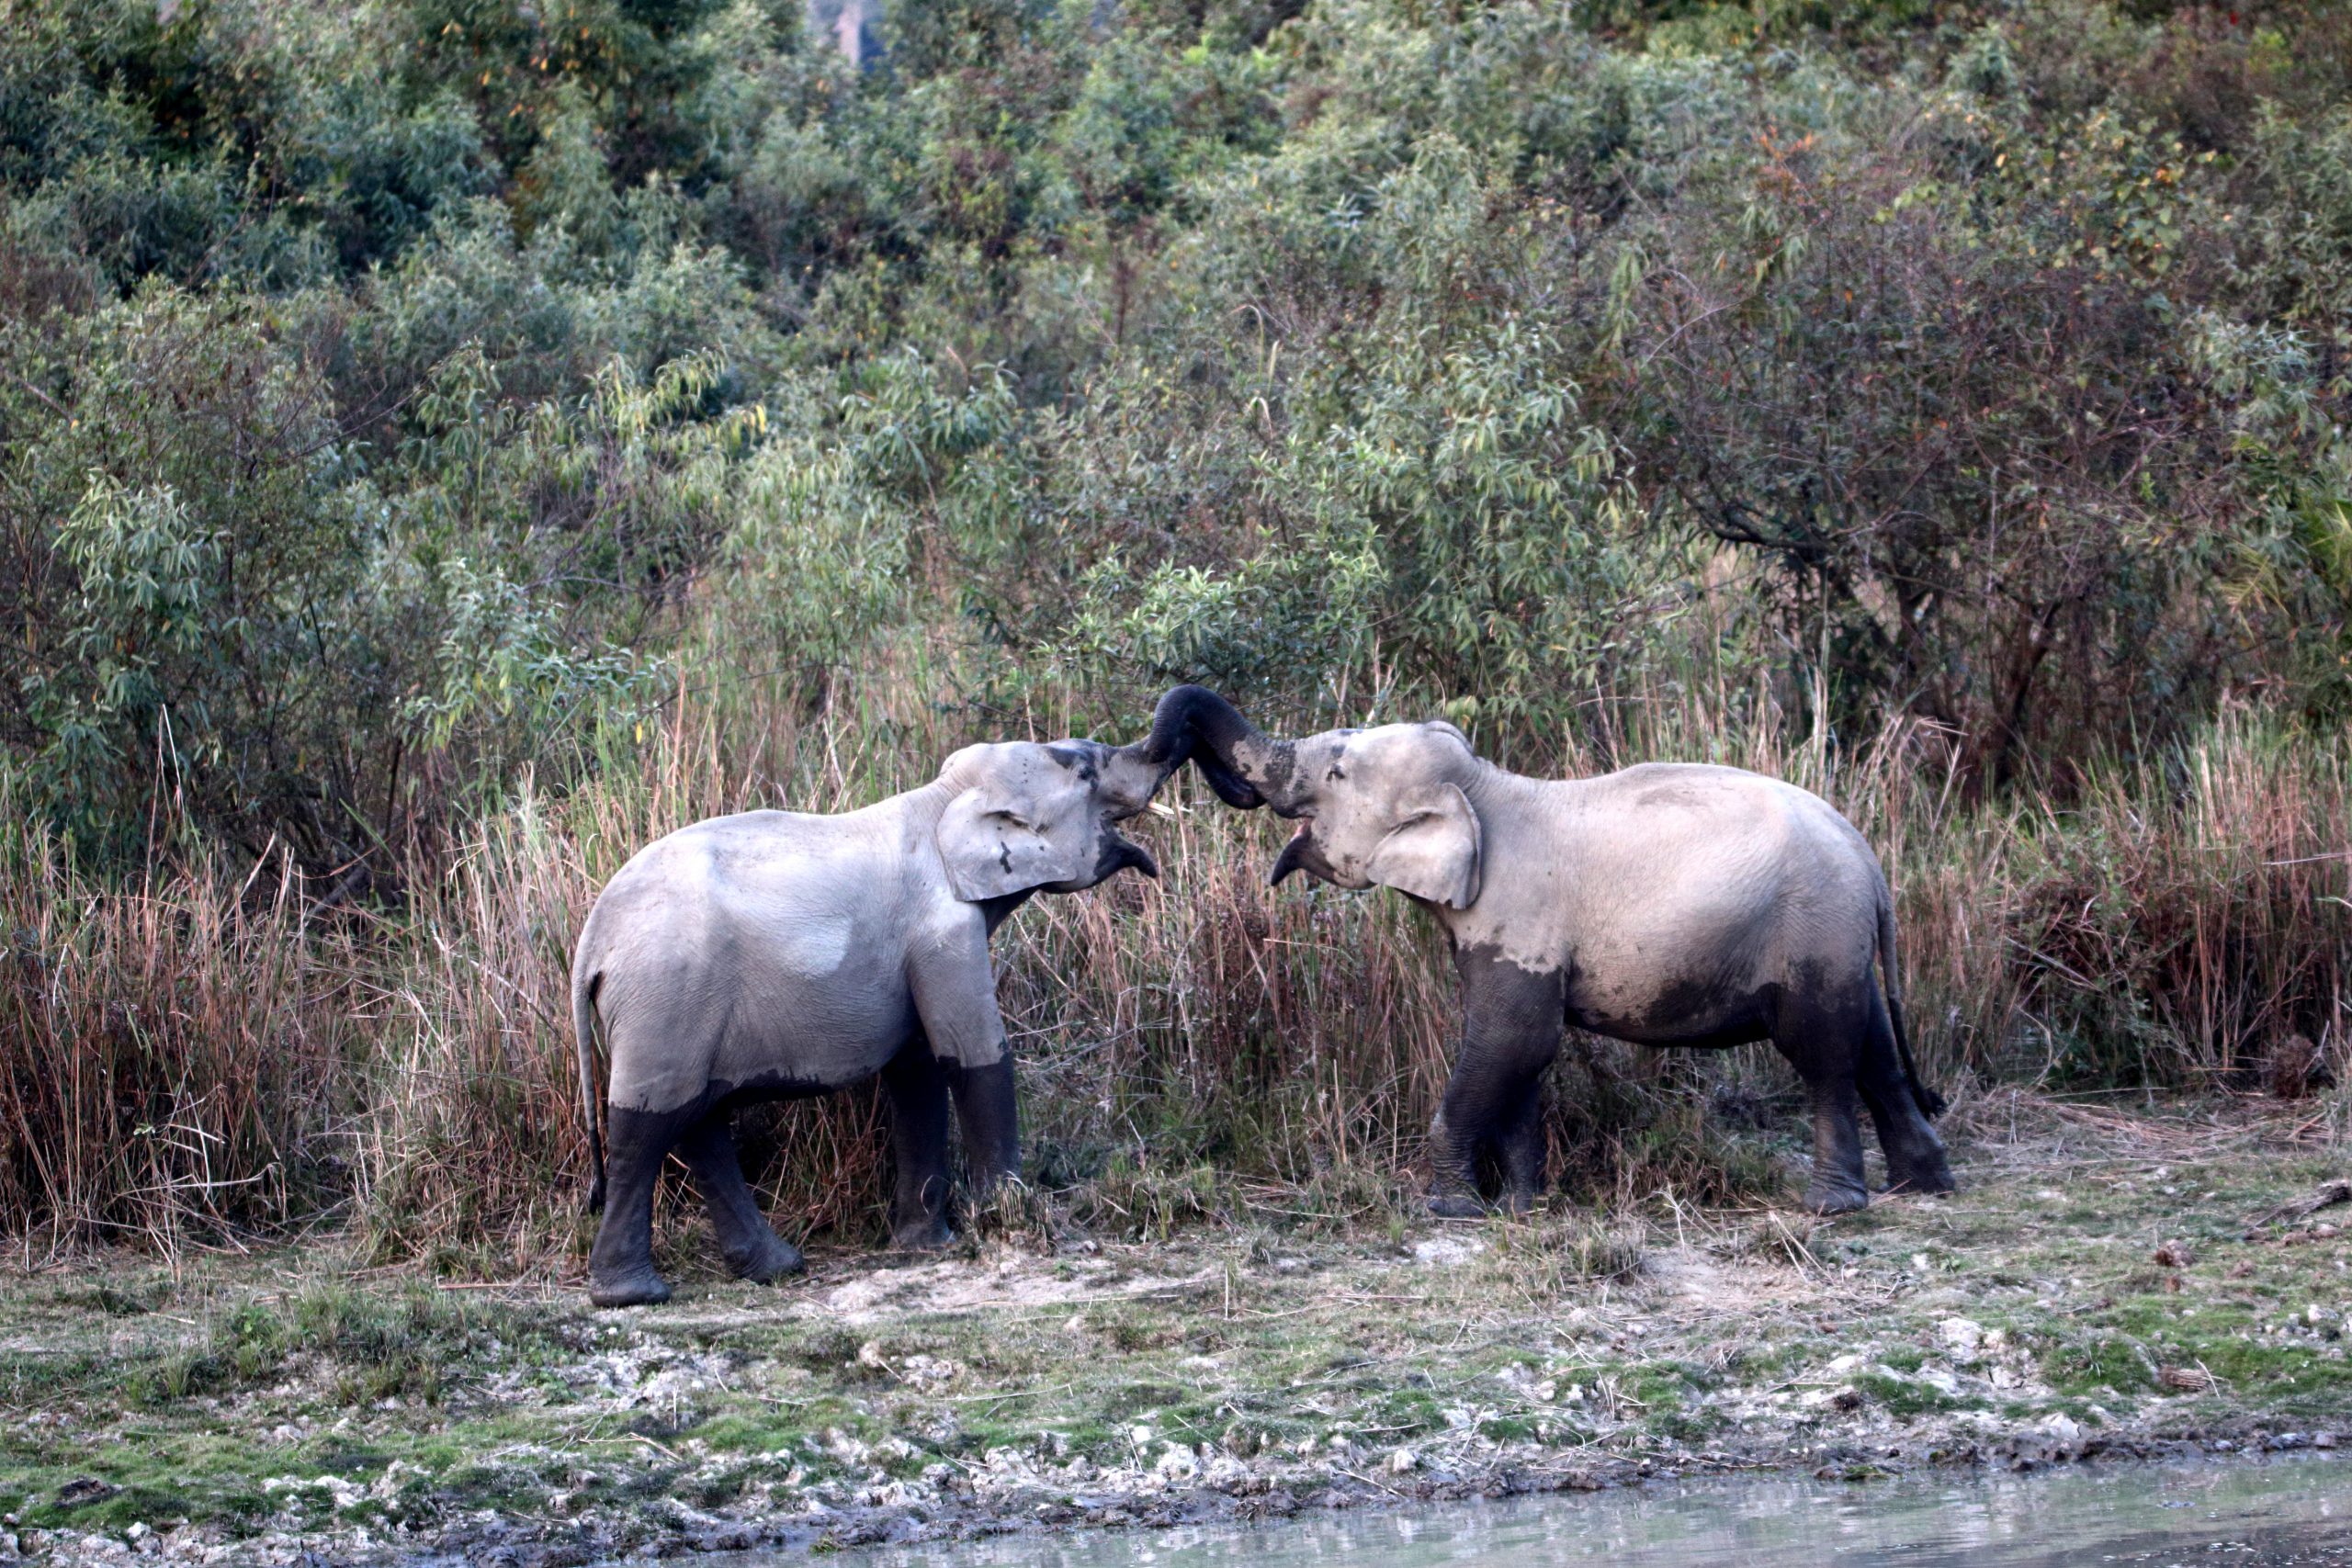 Elephants holding trunks